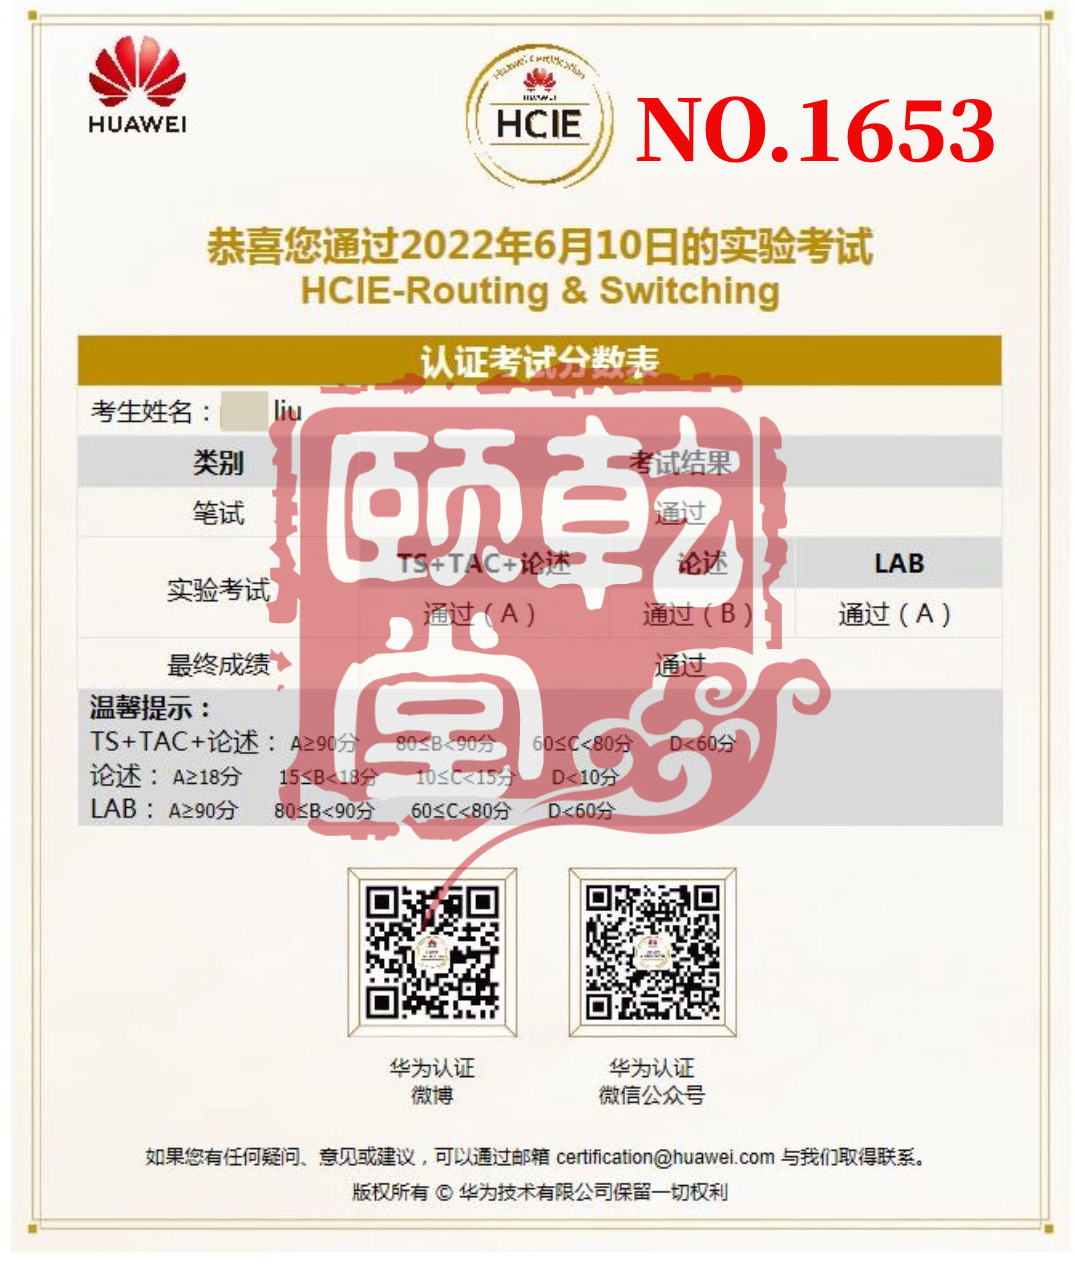 HCIE RS 刘 6.10.jpg